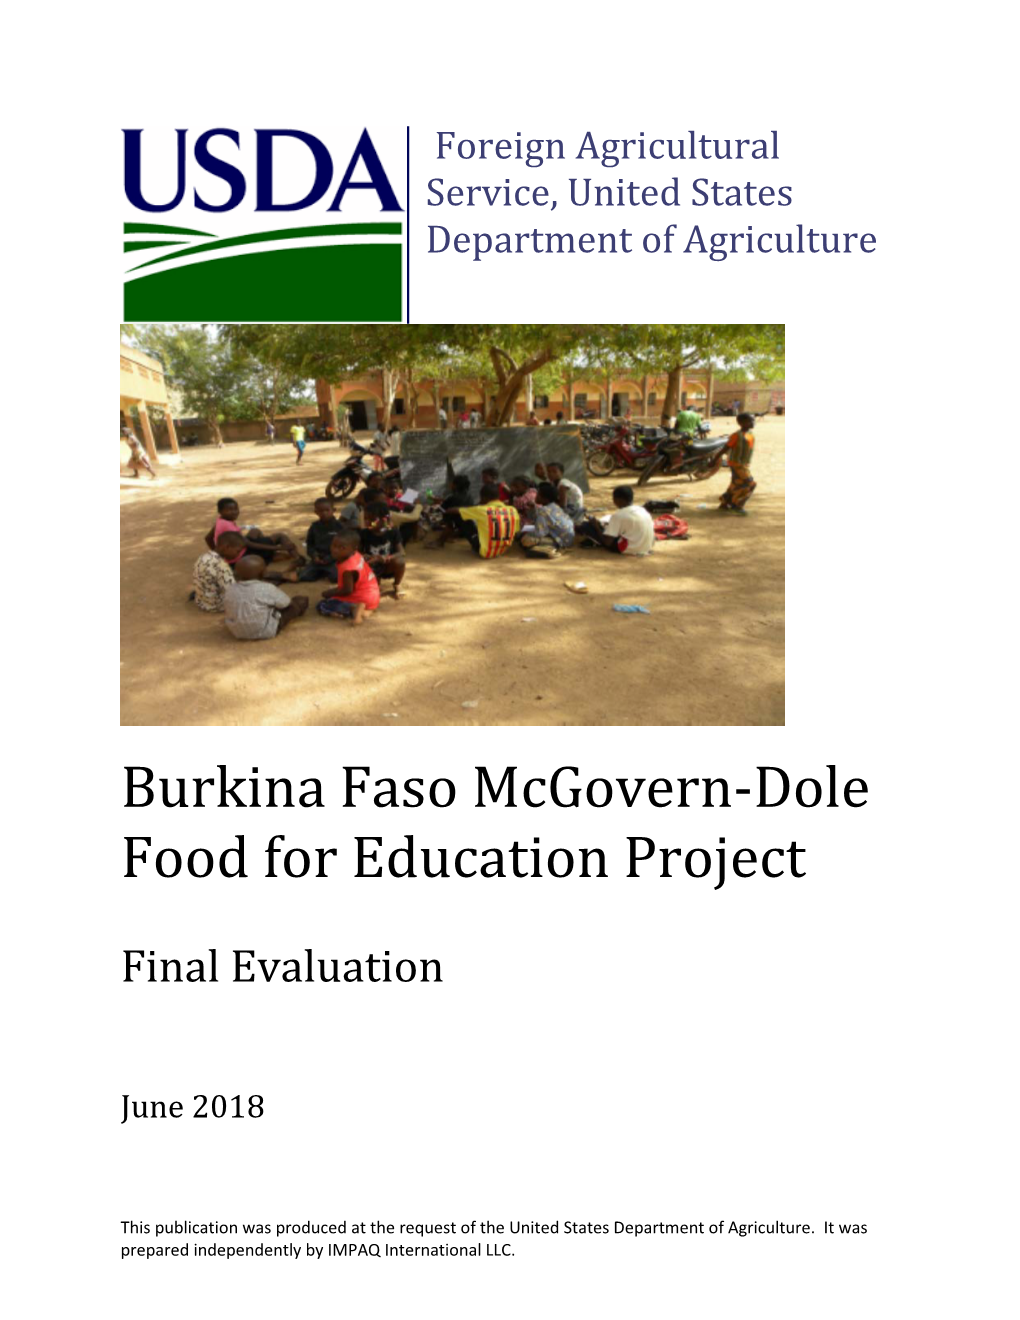 Burkina Faso Mcgovern-Dole Food for Education Project